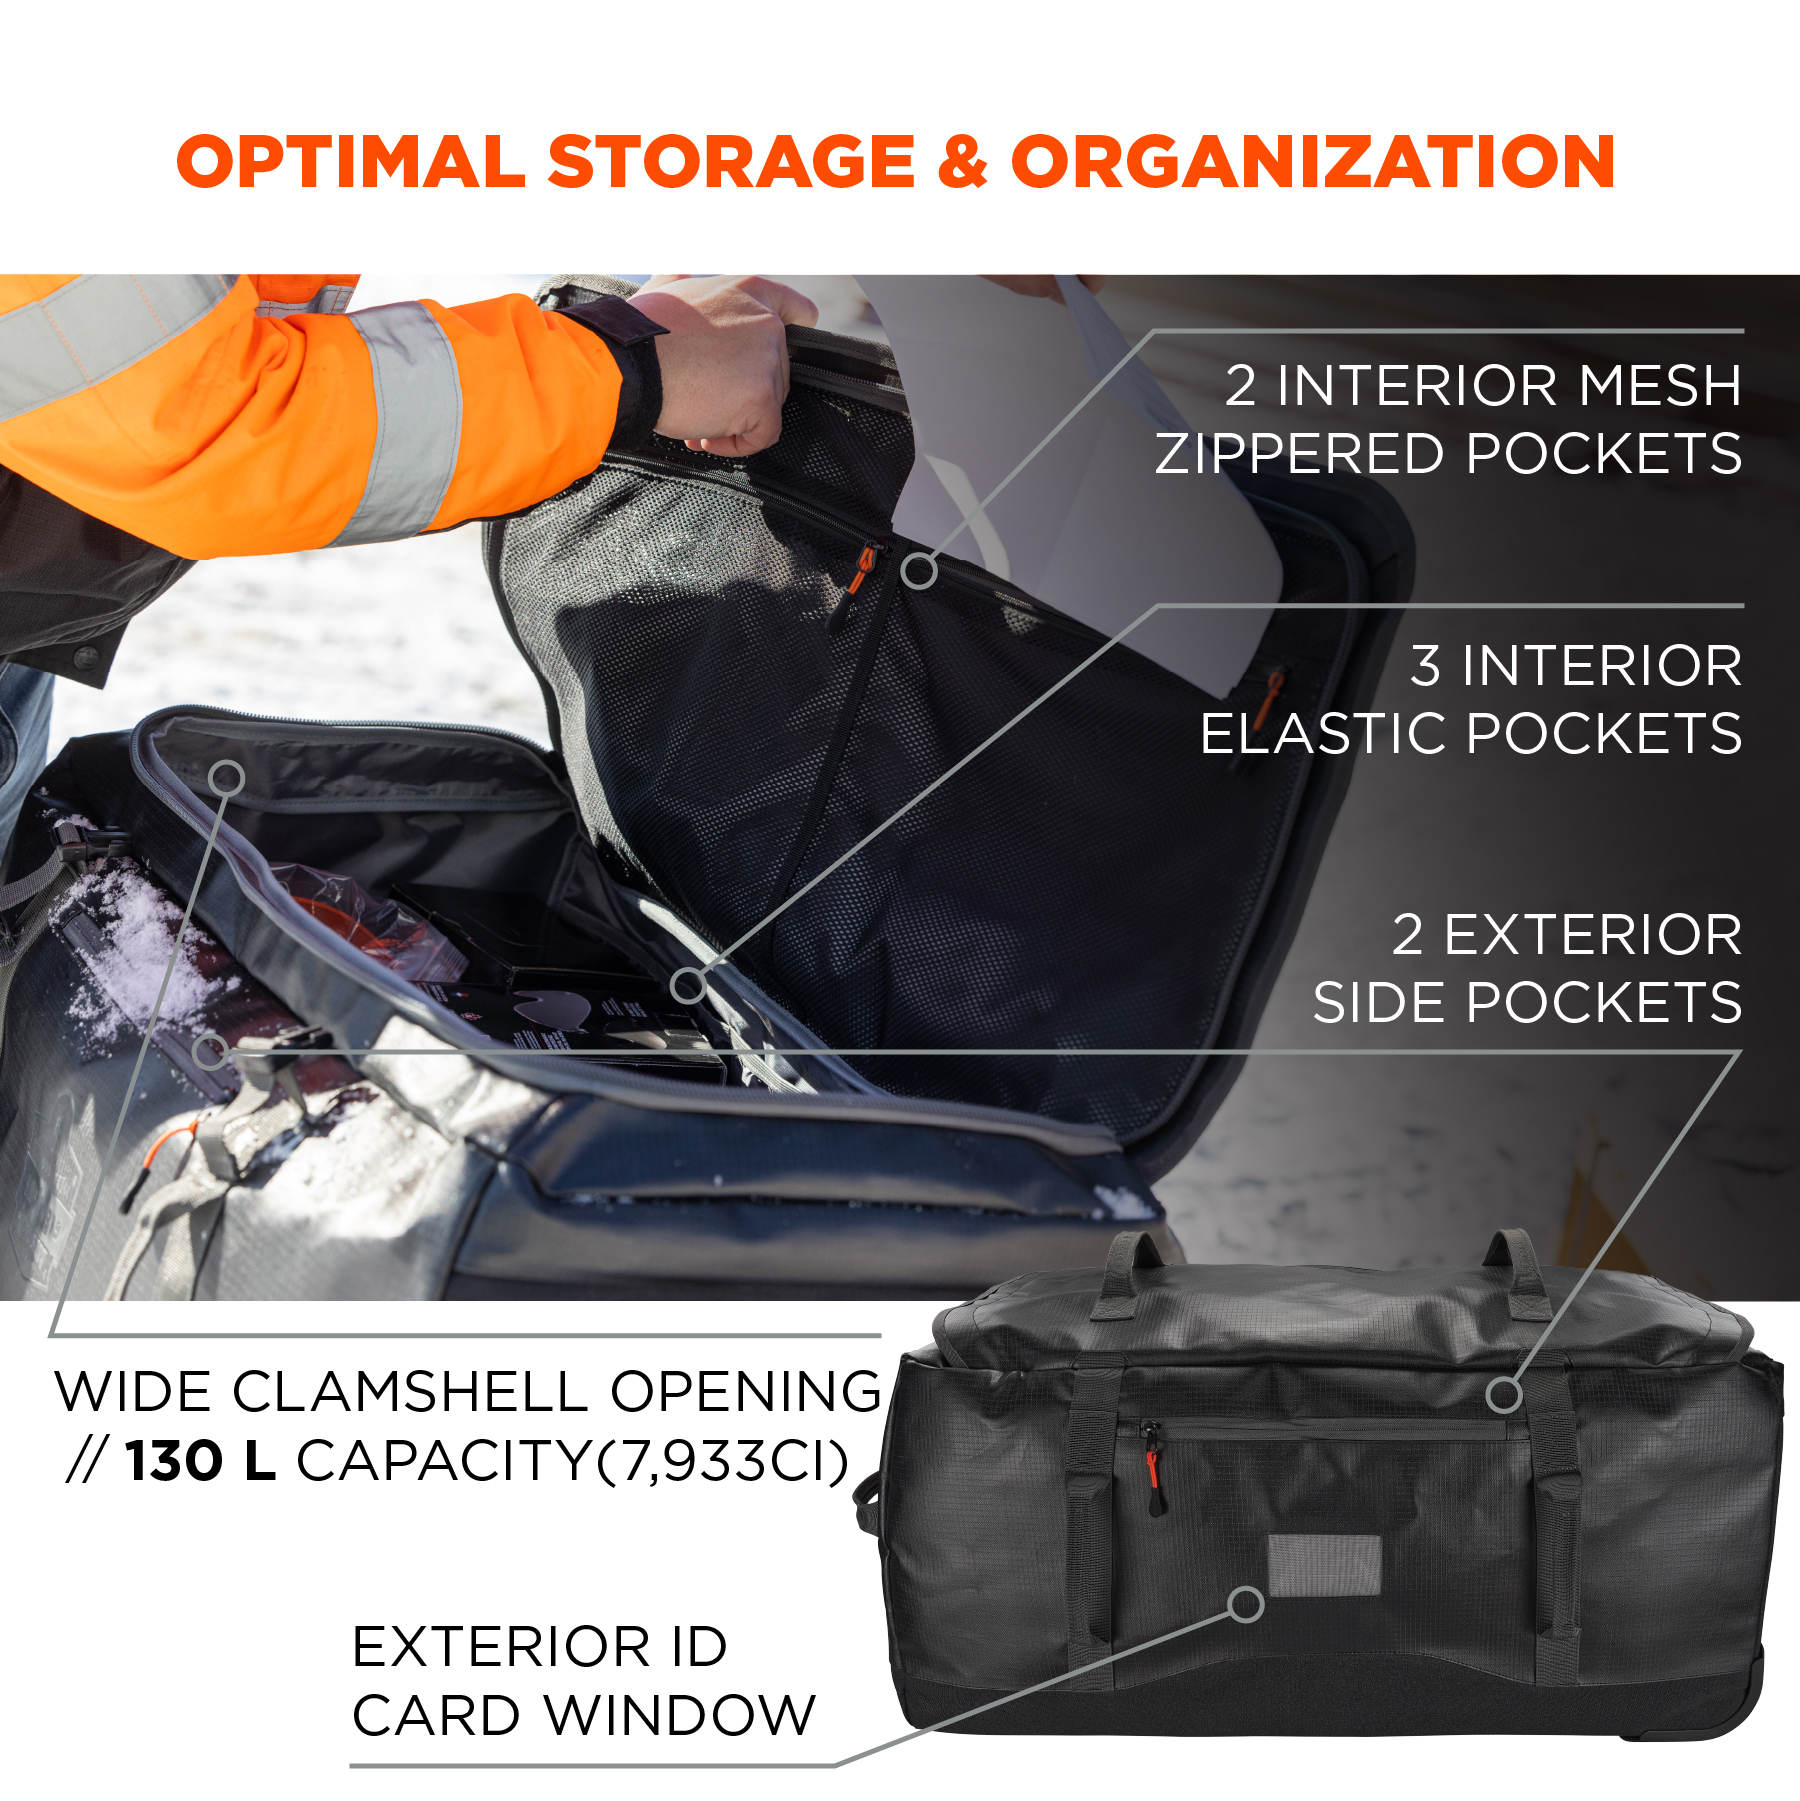 https://www.ergodyne.com/sites/default/files/product-images/13037-5032-water-resistant-wheeled-duffel-bag-black-optimal-storage-and-organization.jpg